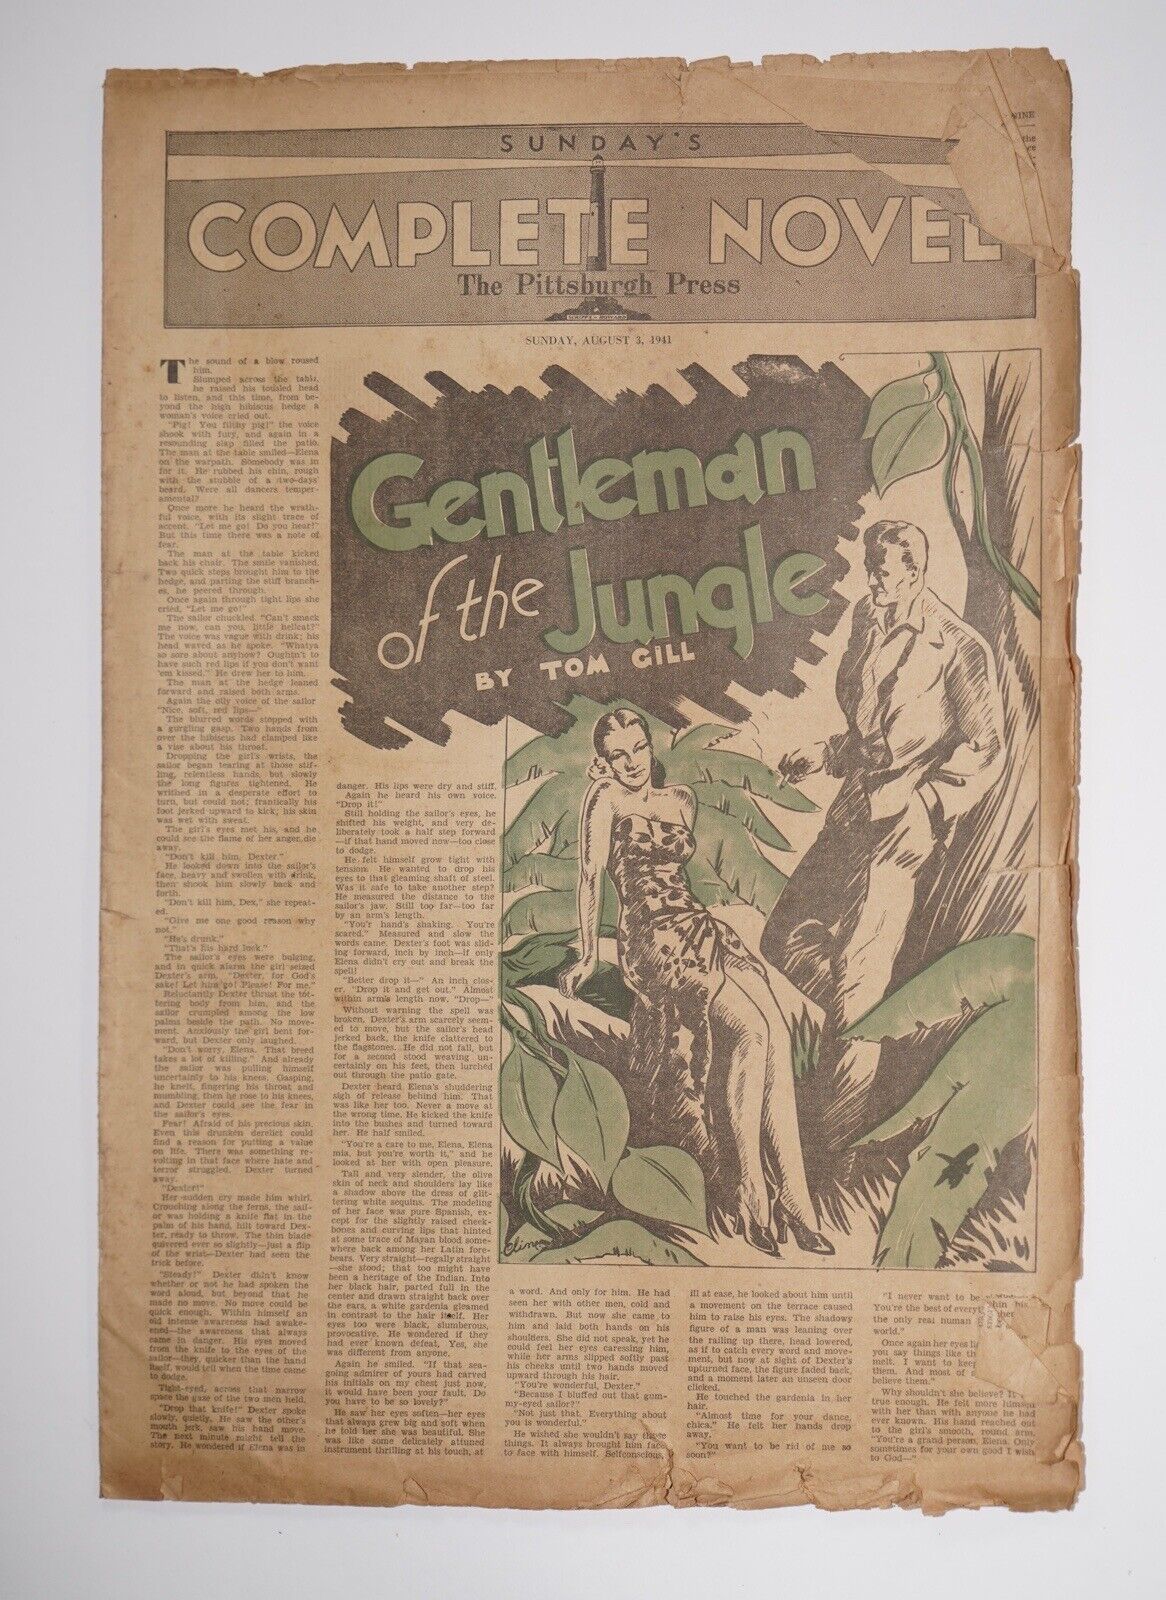 1941 The Pittsburgh Press Sunday’s Novel “Gentleman of the Jungle” (17”x12”)